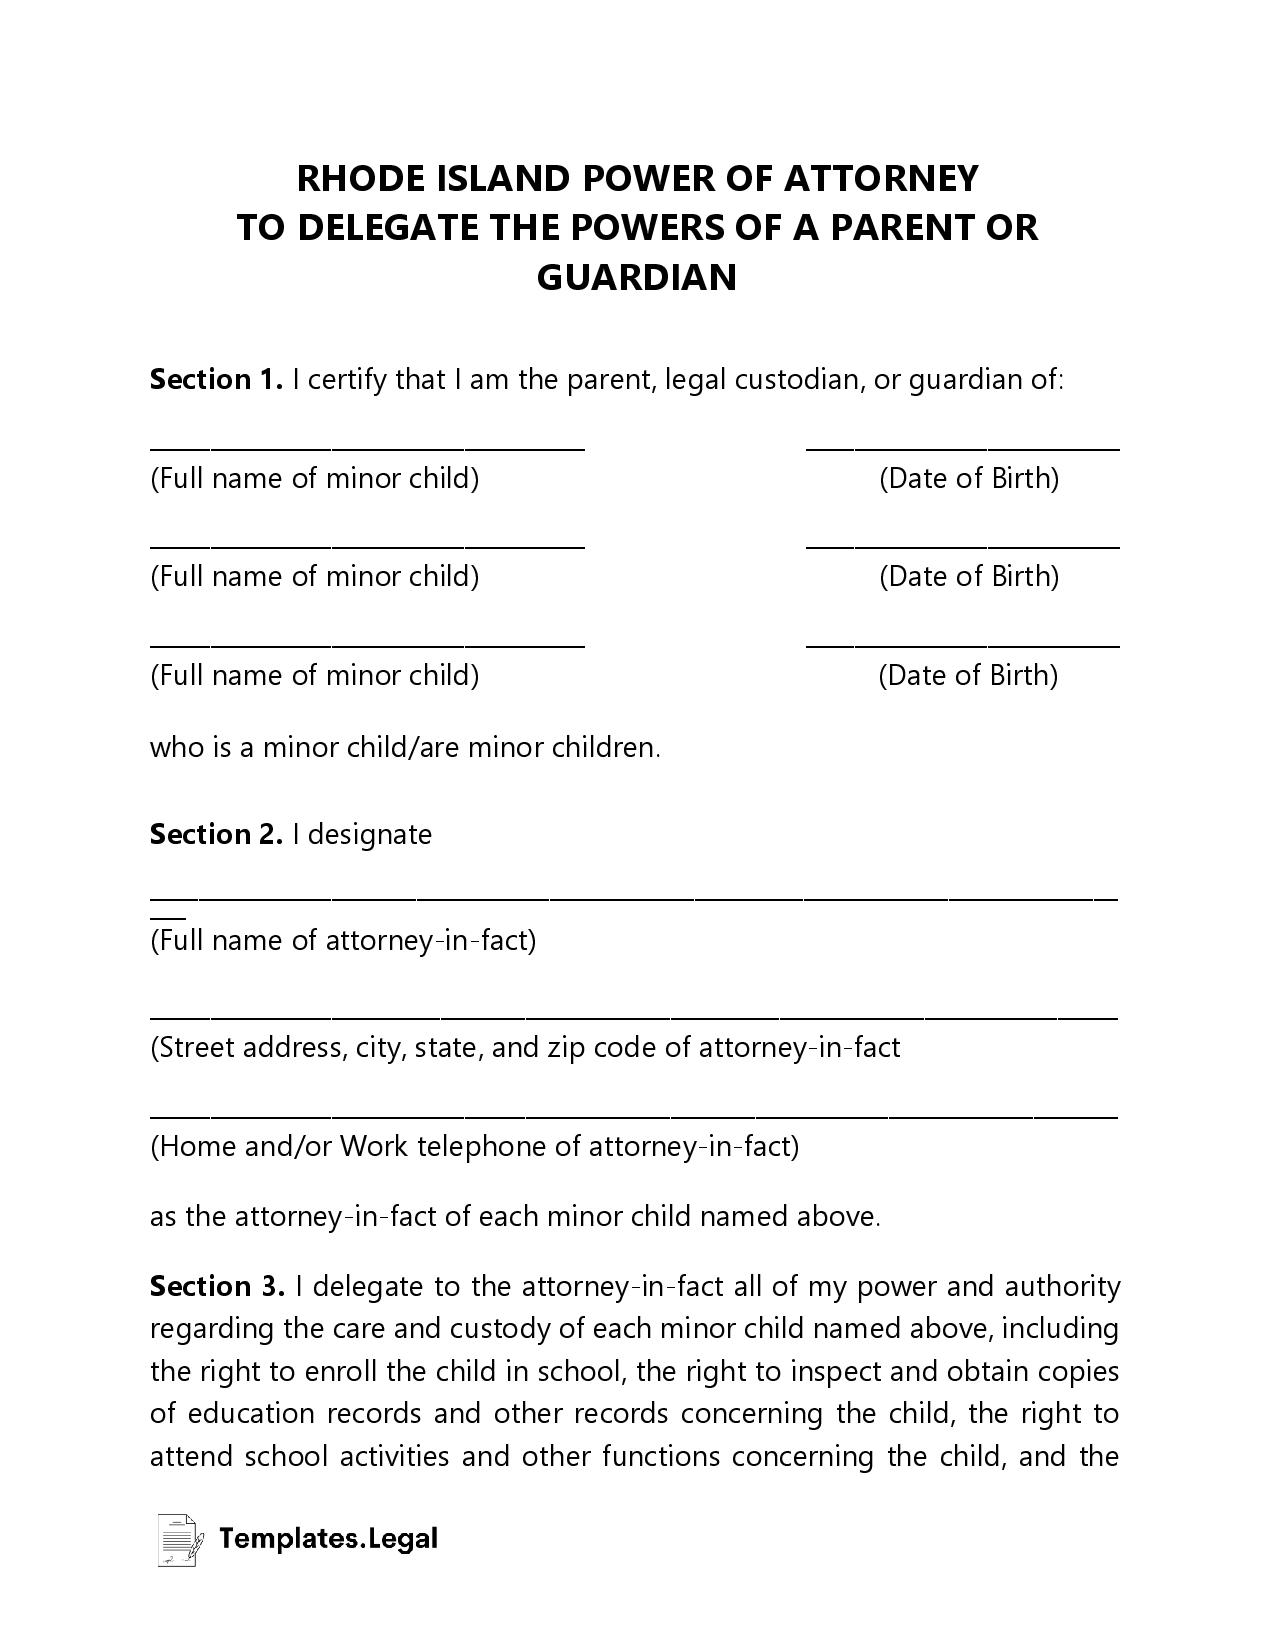 Rhode Island Minor (Child) Power of Attorney - Templates.Legal